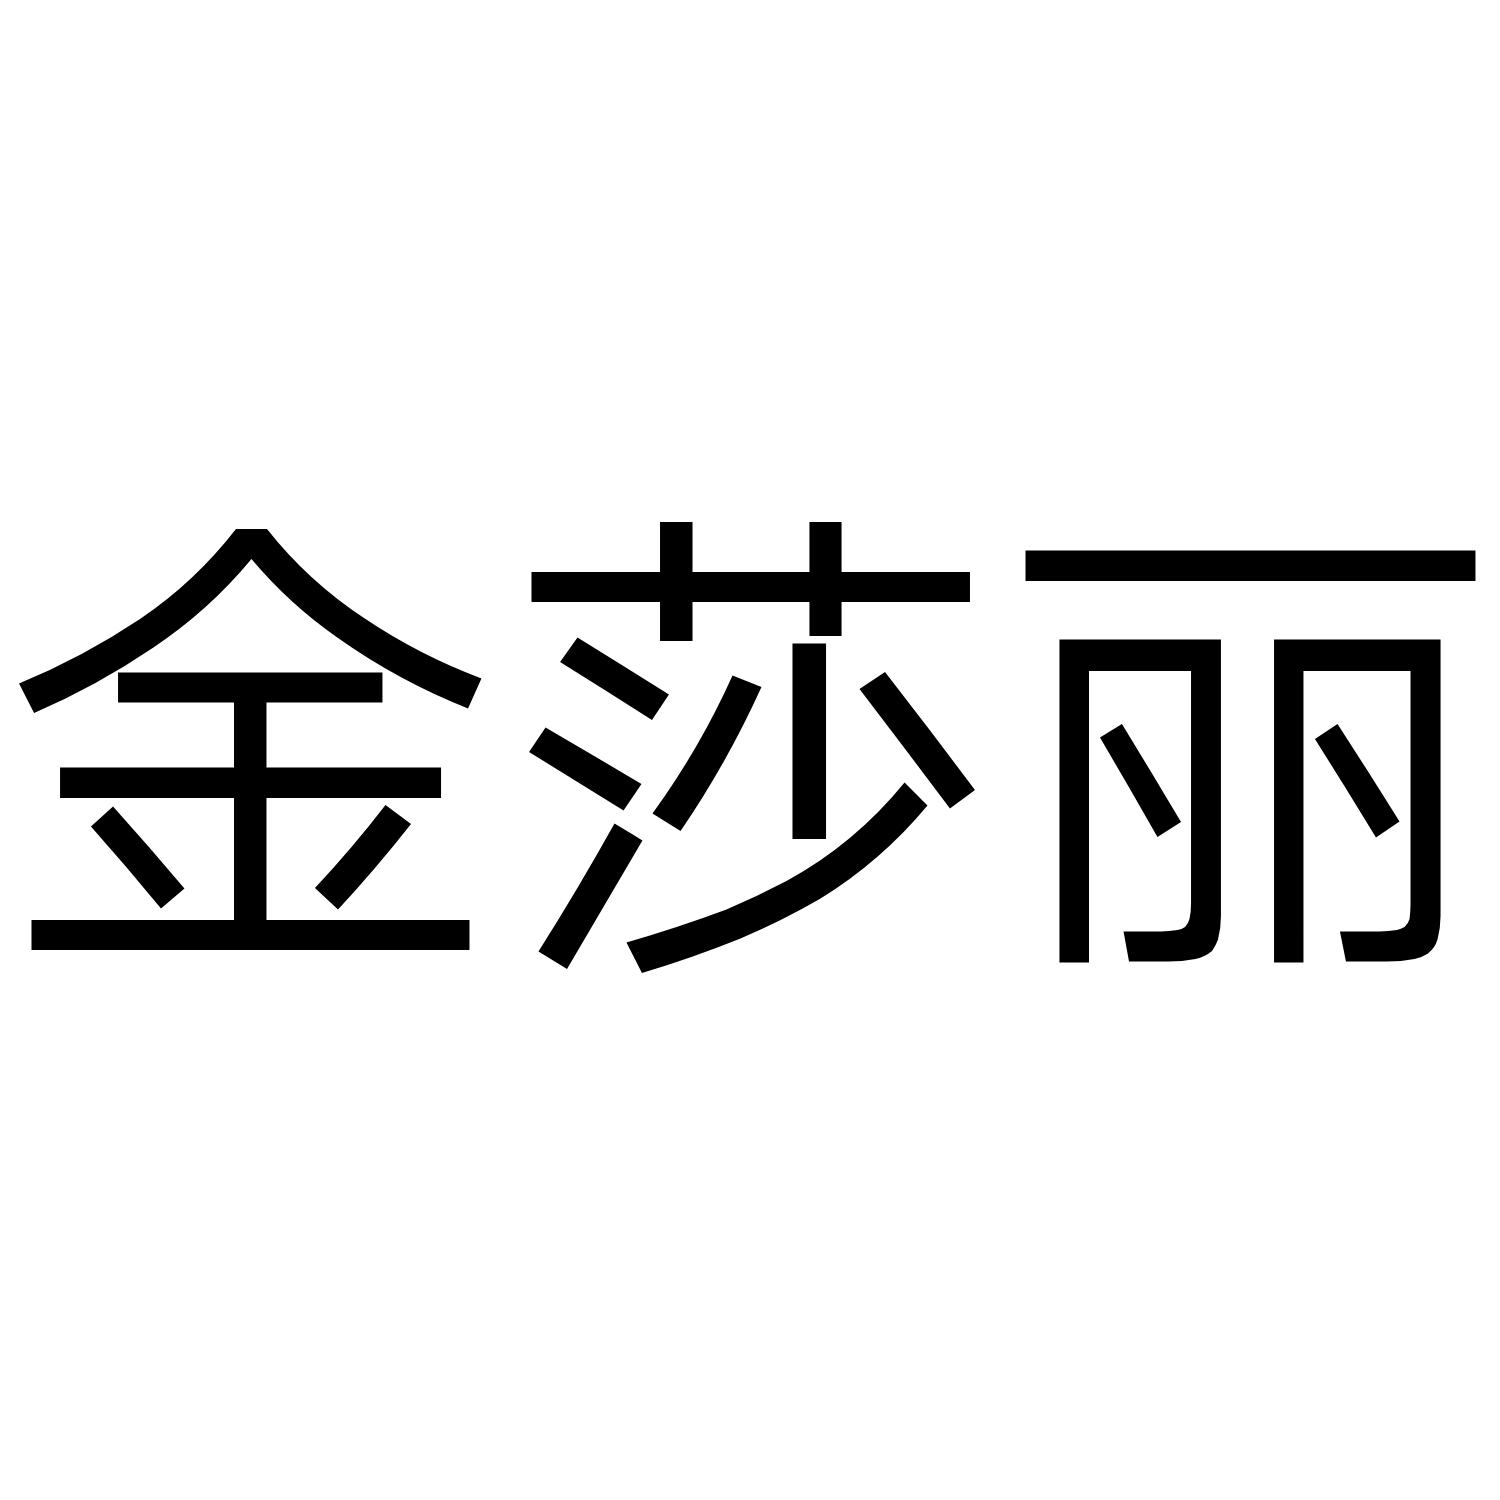 金莎丽logo